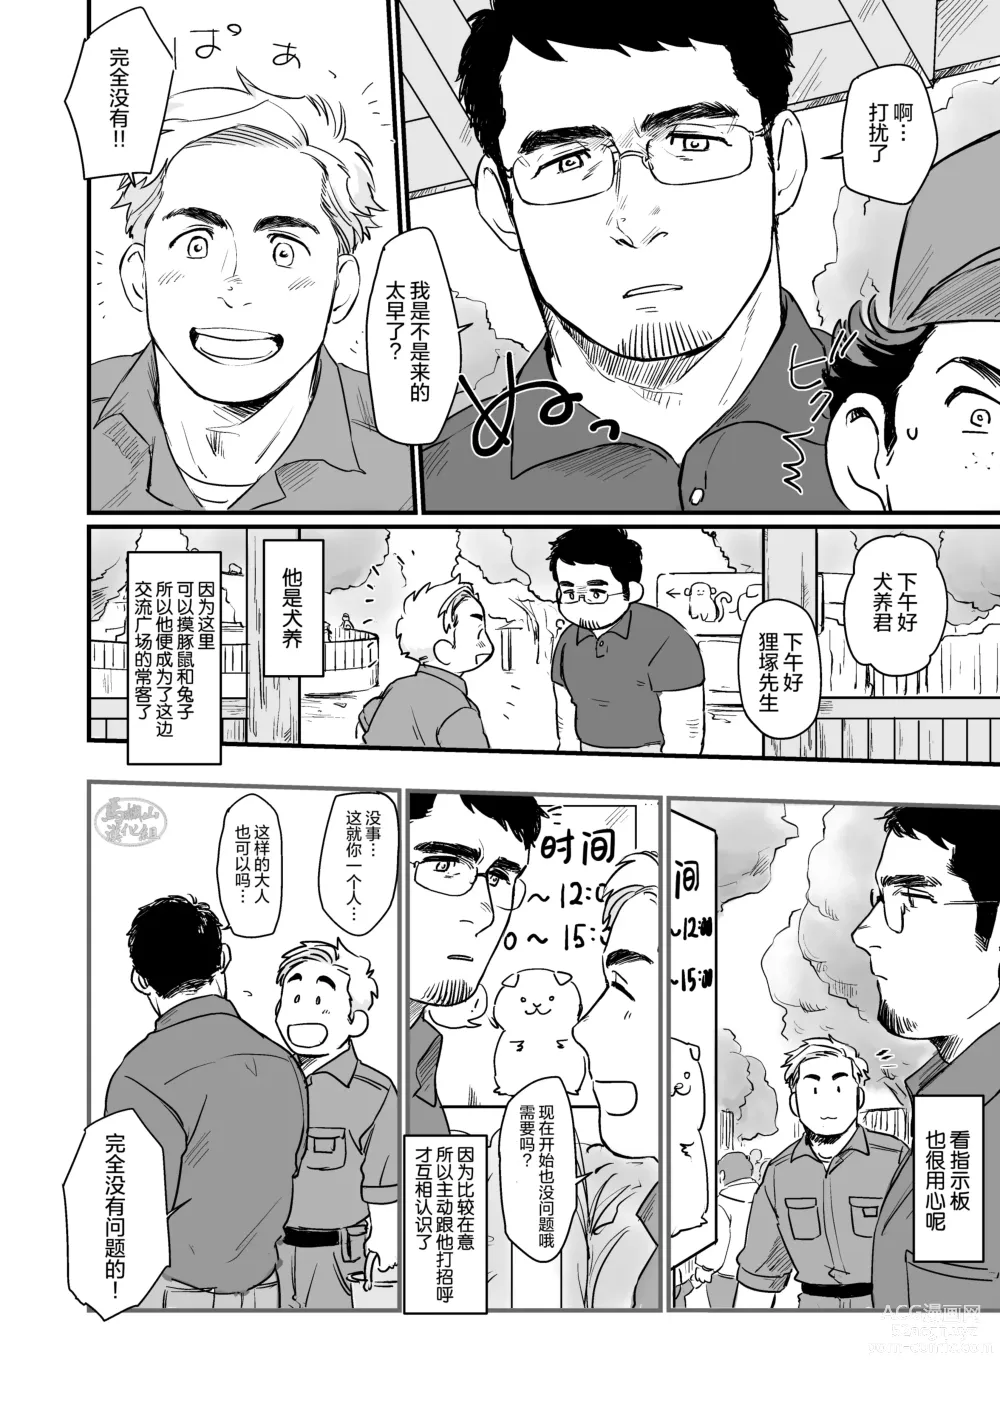 Page 4 of manga ビースティコンプレックス.动物狂想曲